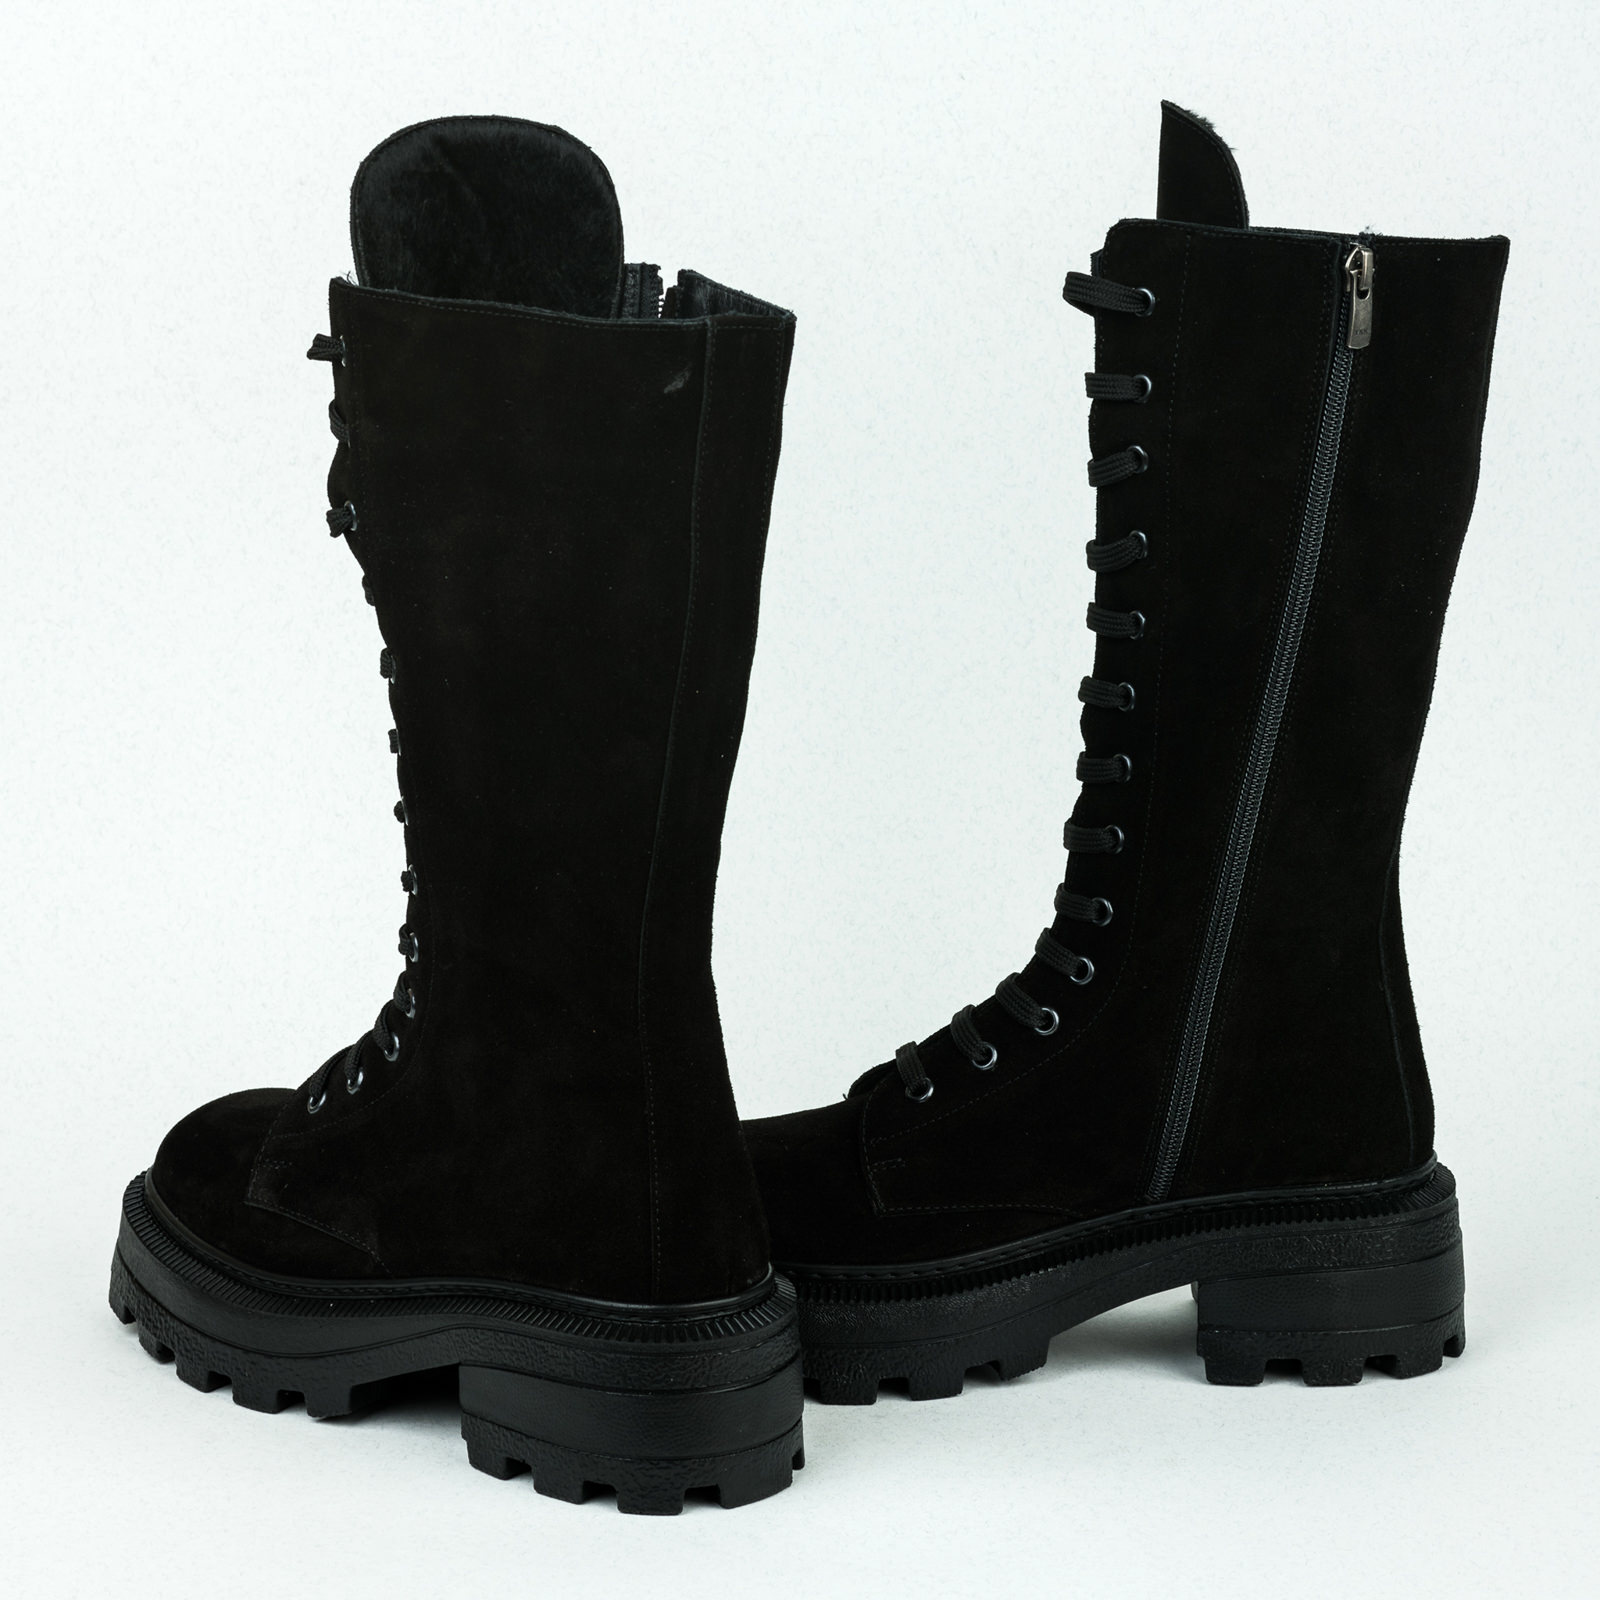 Leather WATERPROOF boots B091 - BLACK